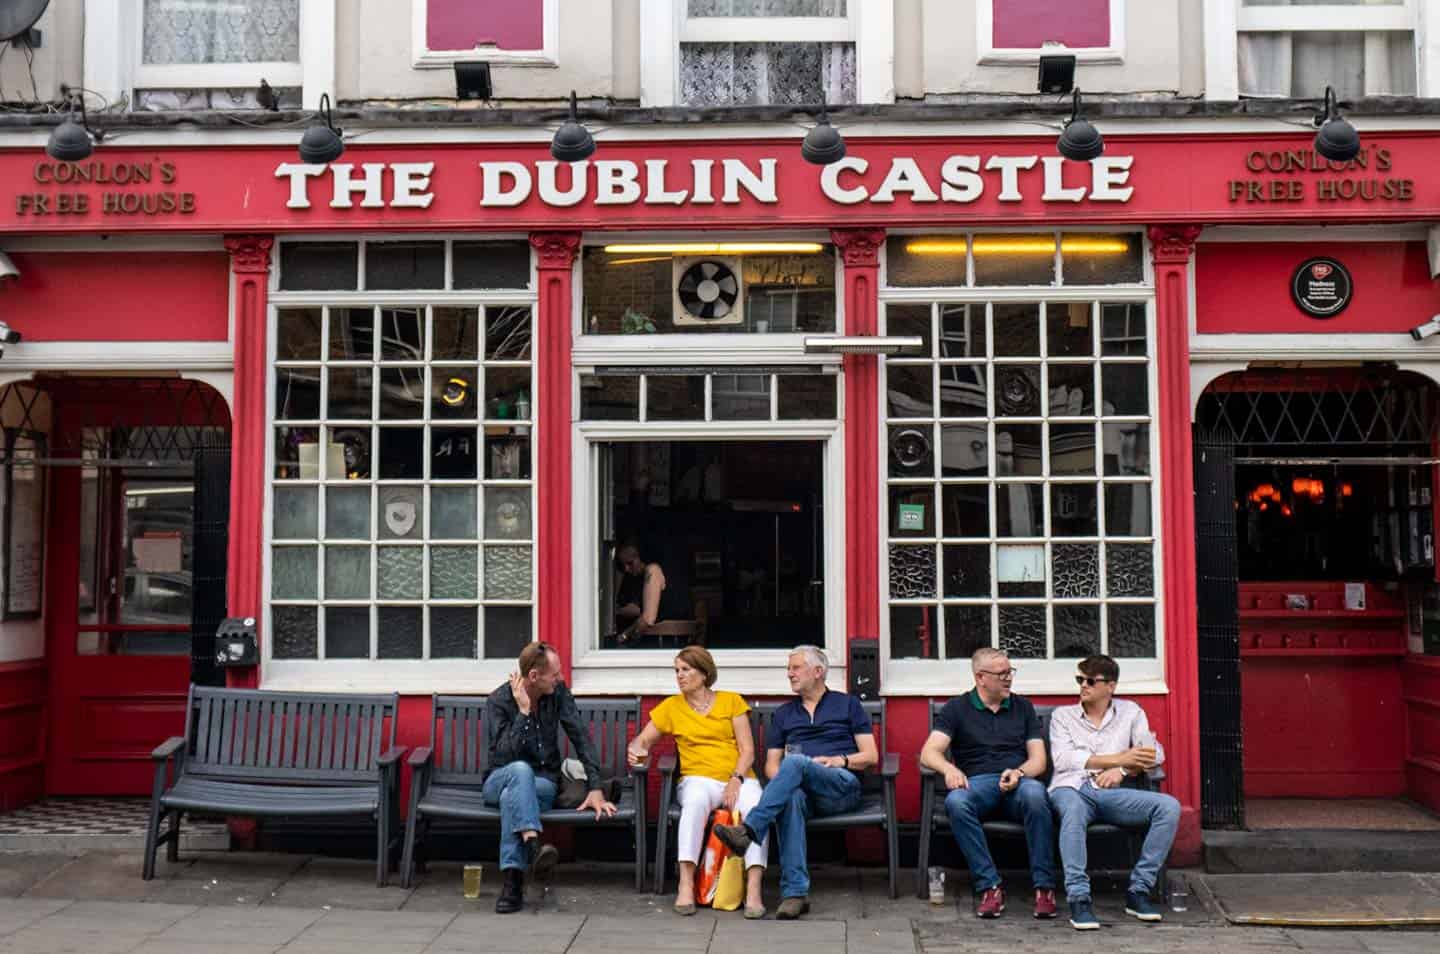 Image of the Dublin Castle pub in Camden, London